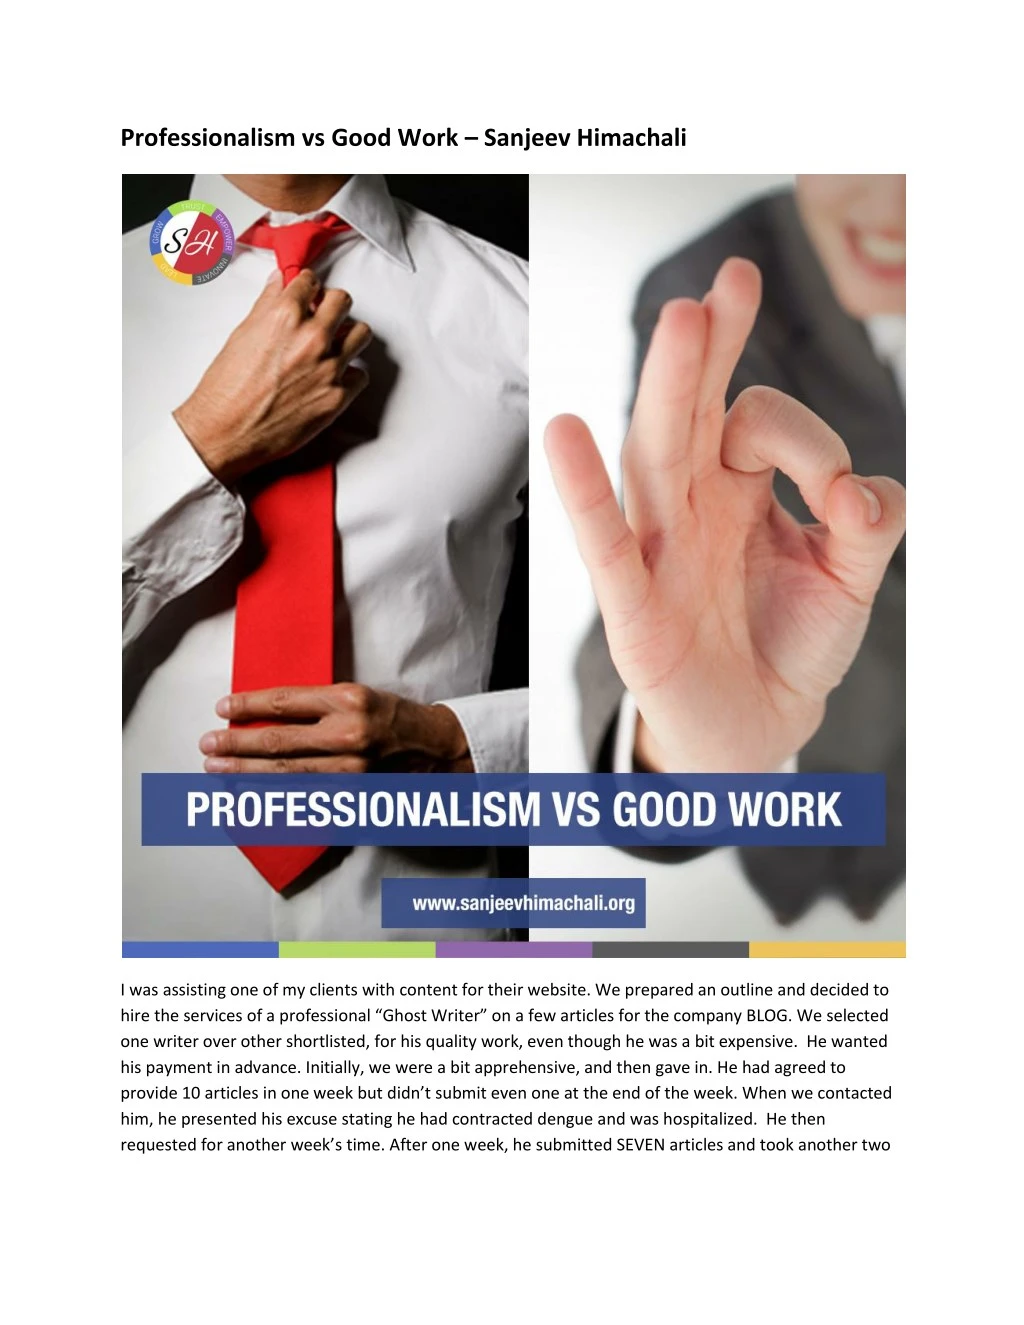 professionalism vs good work sanjeev himachali